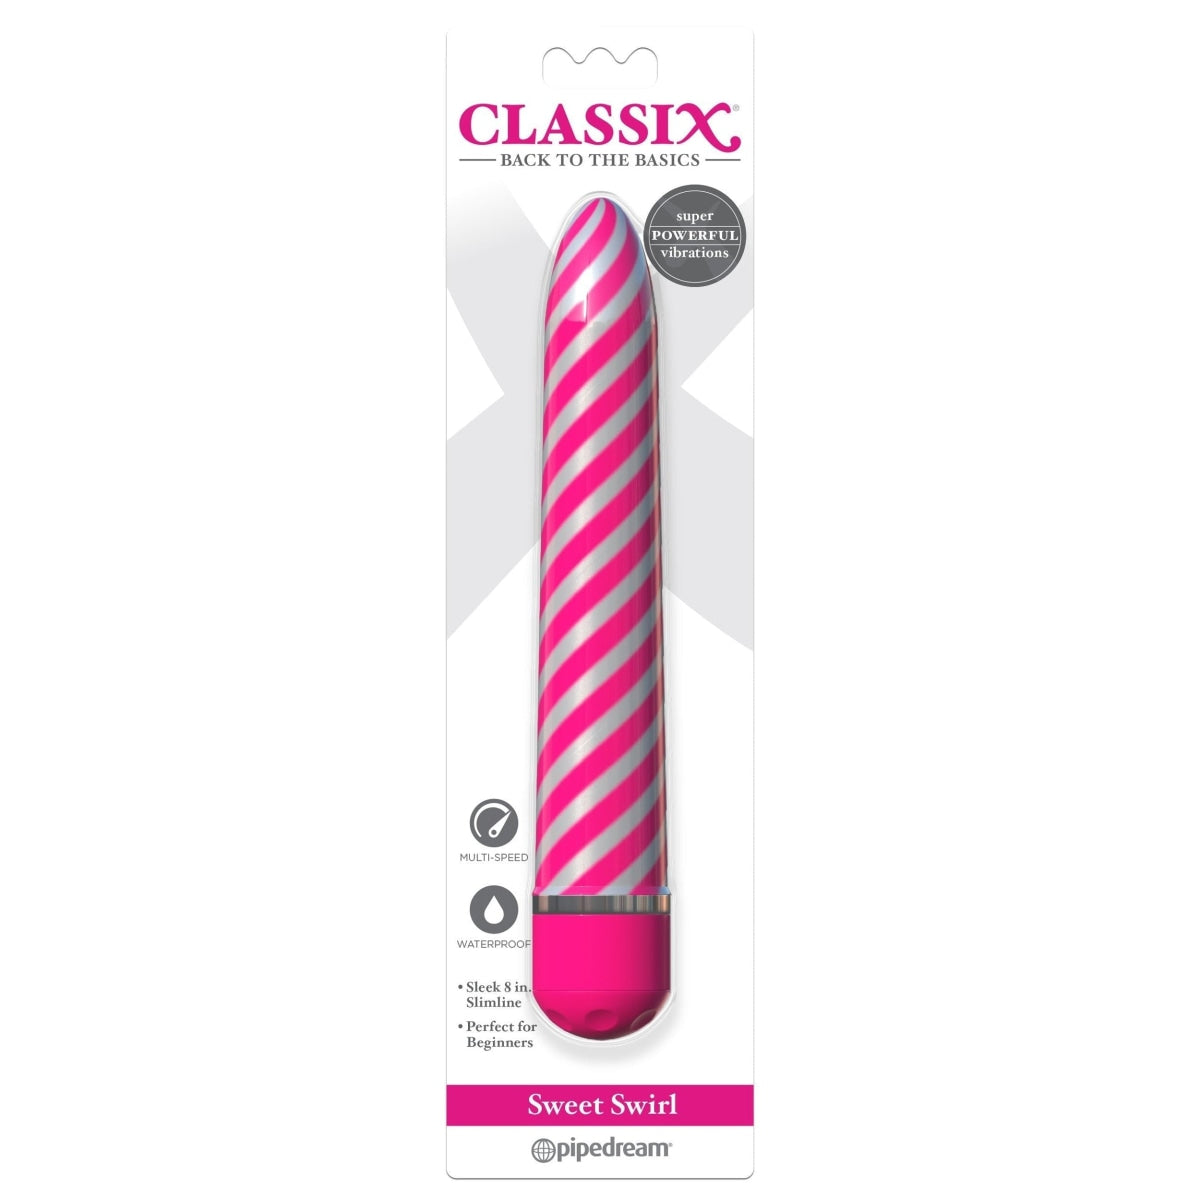 Classix Sweet Swirl Vibrator Pink Intimates Adult Boutique